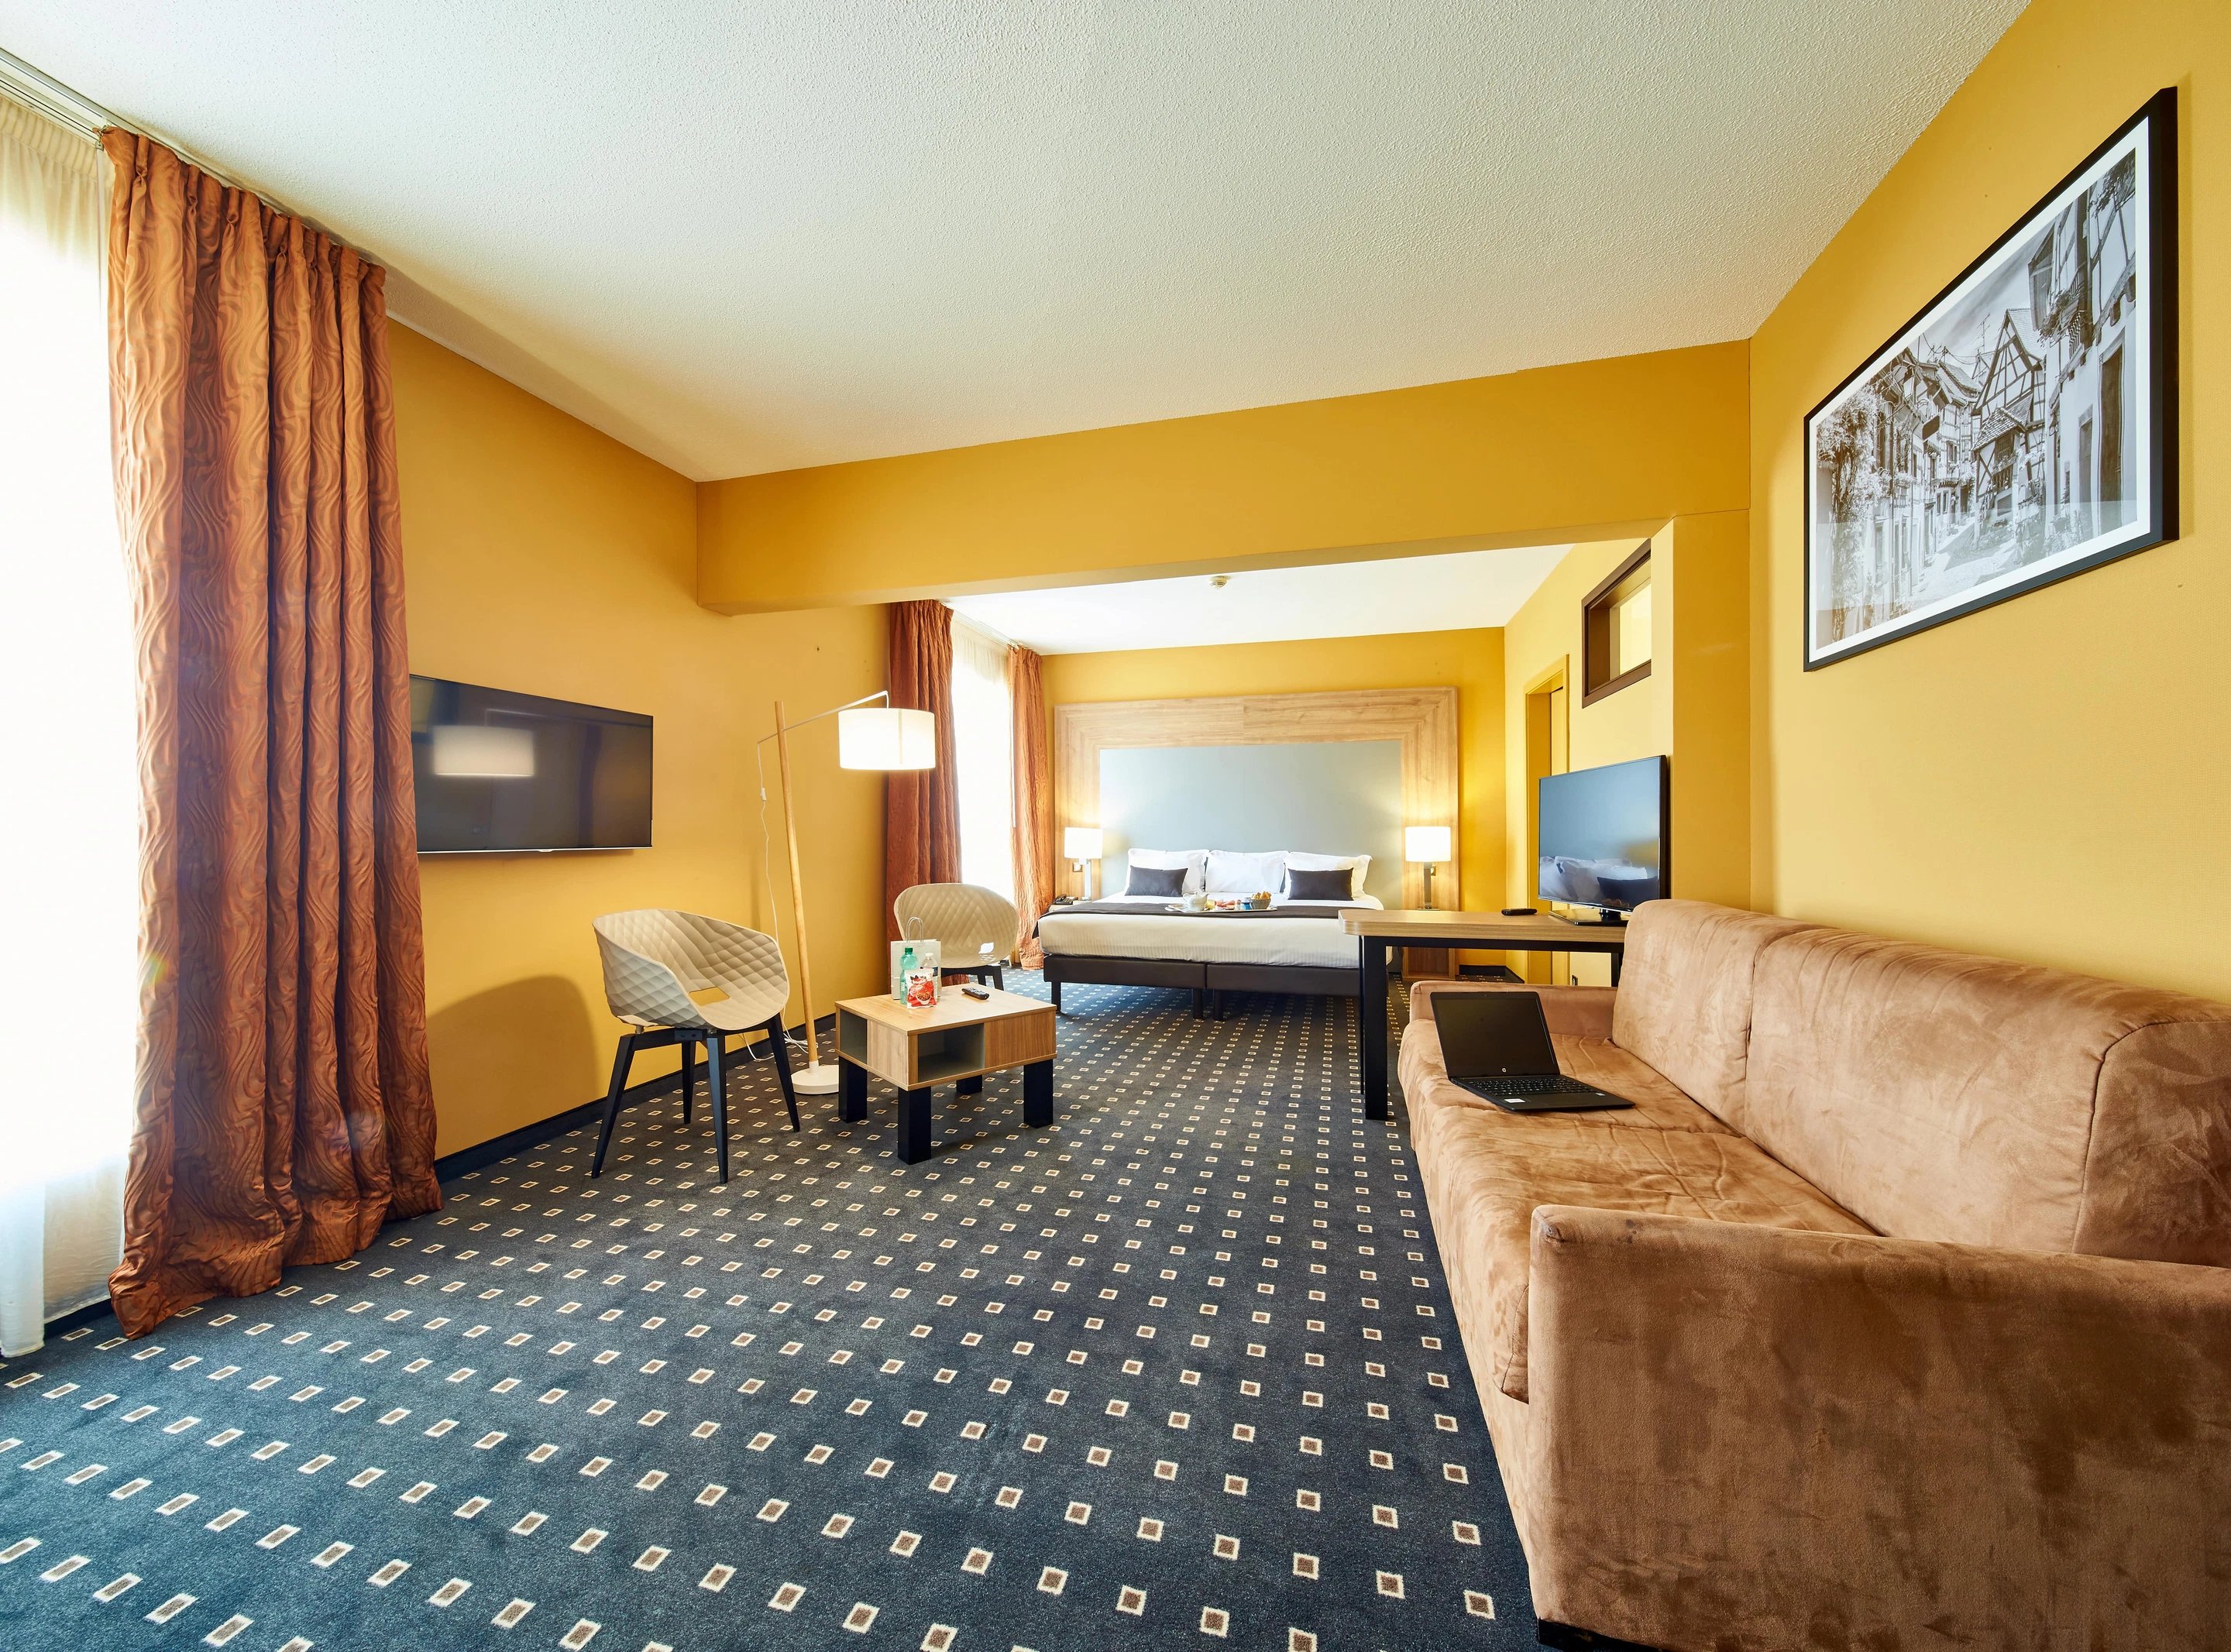 7 Hôtel & Spa Junior Suite with kingsize bed desk and television